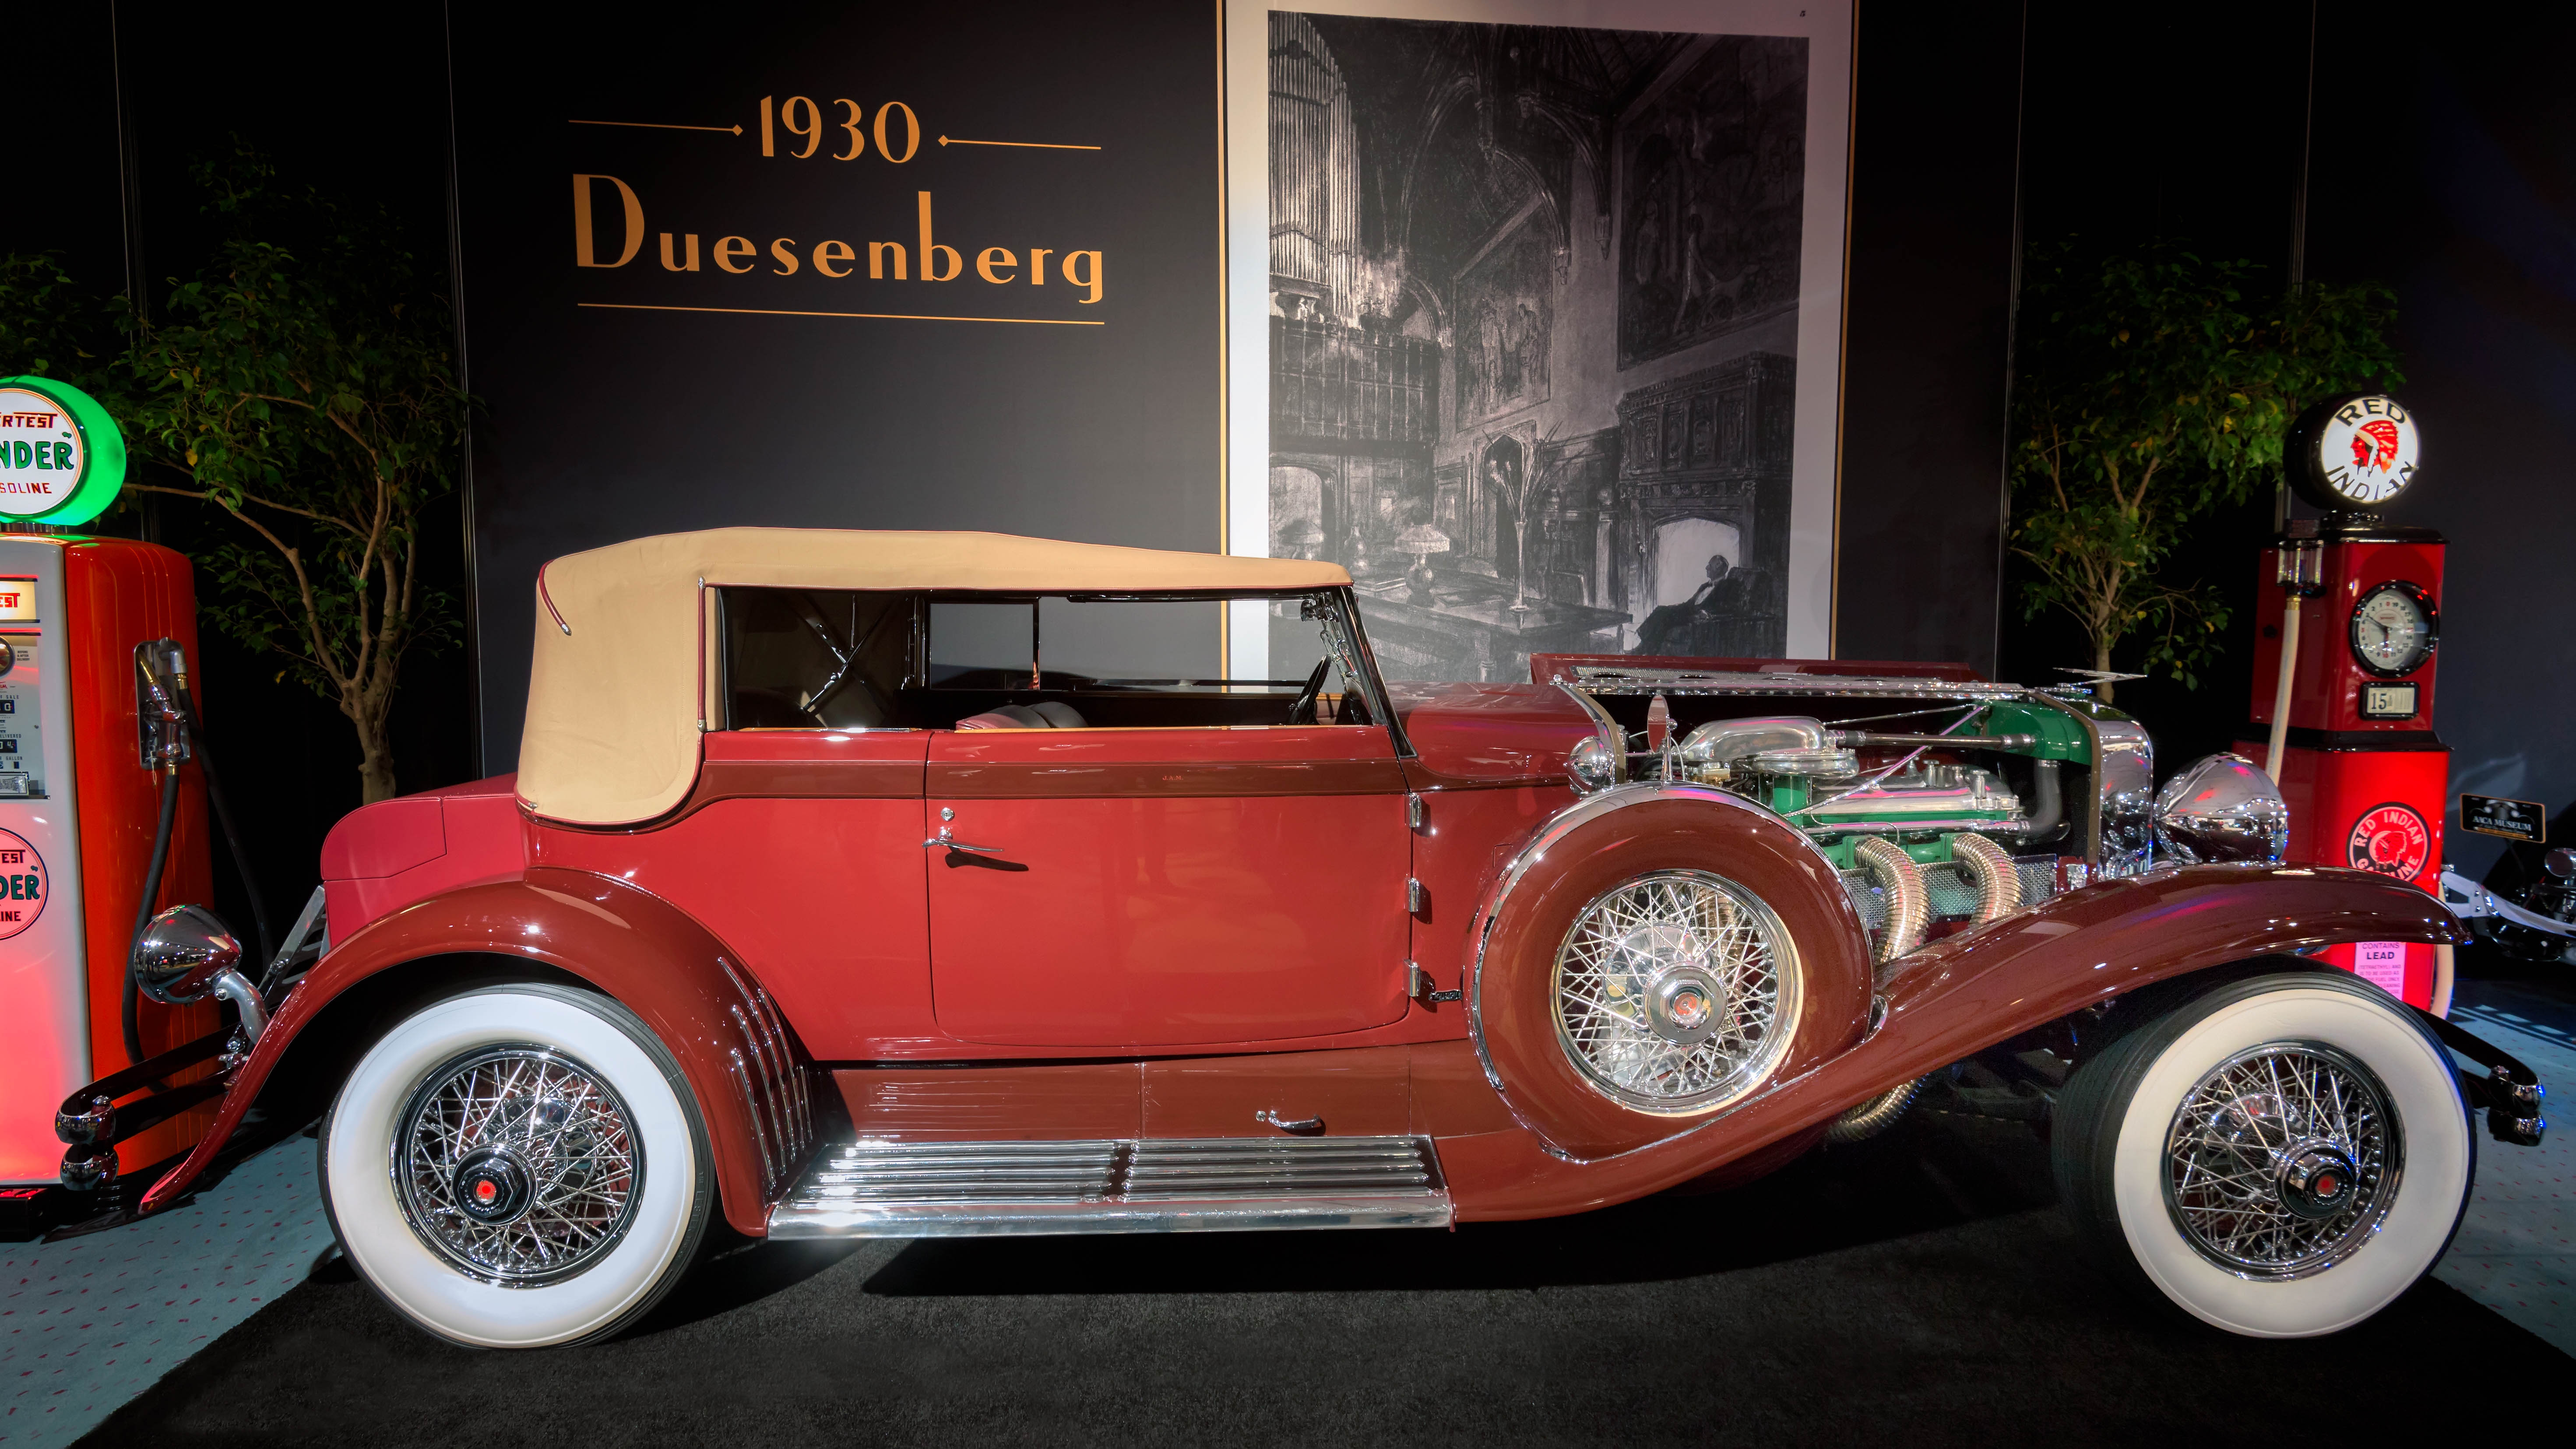 1930 Duesenberg  Model J Convertible Coupe At The 2016 Toronto International Auto Show. by Joe deSousa